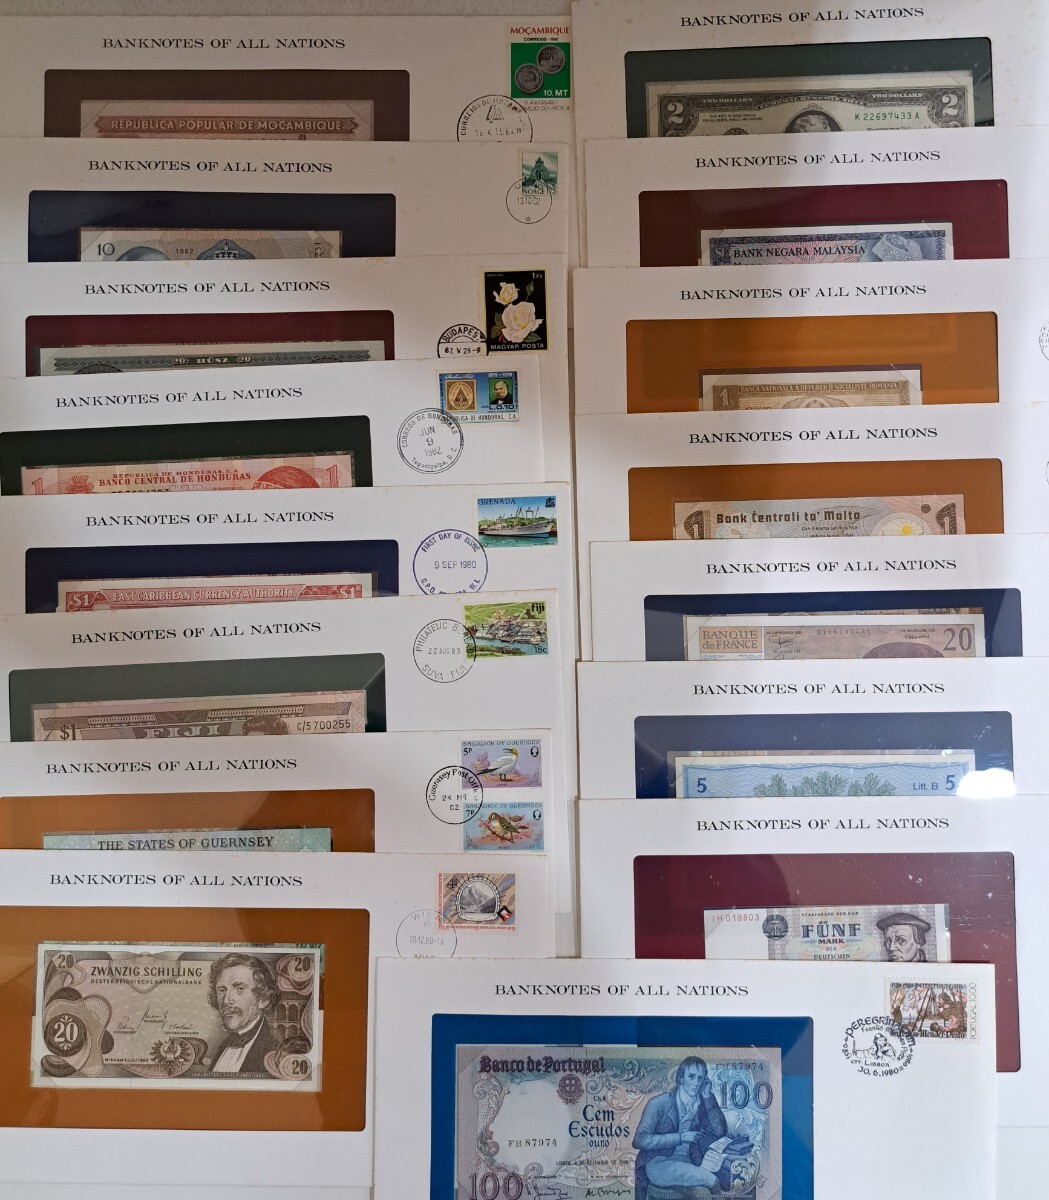 **BANKNOTES OF ALL NATIONS мир. страна .. банкноты коллекция зарубежный банкноты банкноты 74 листов **